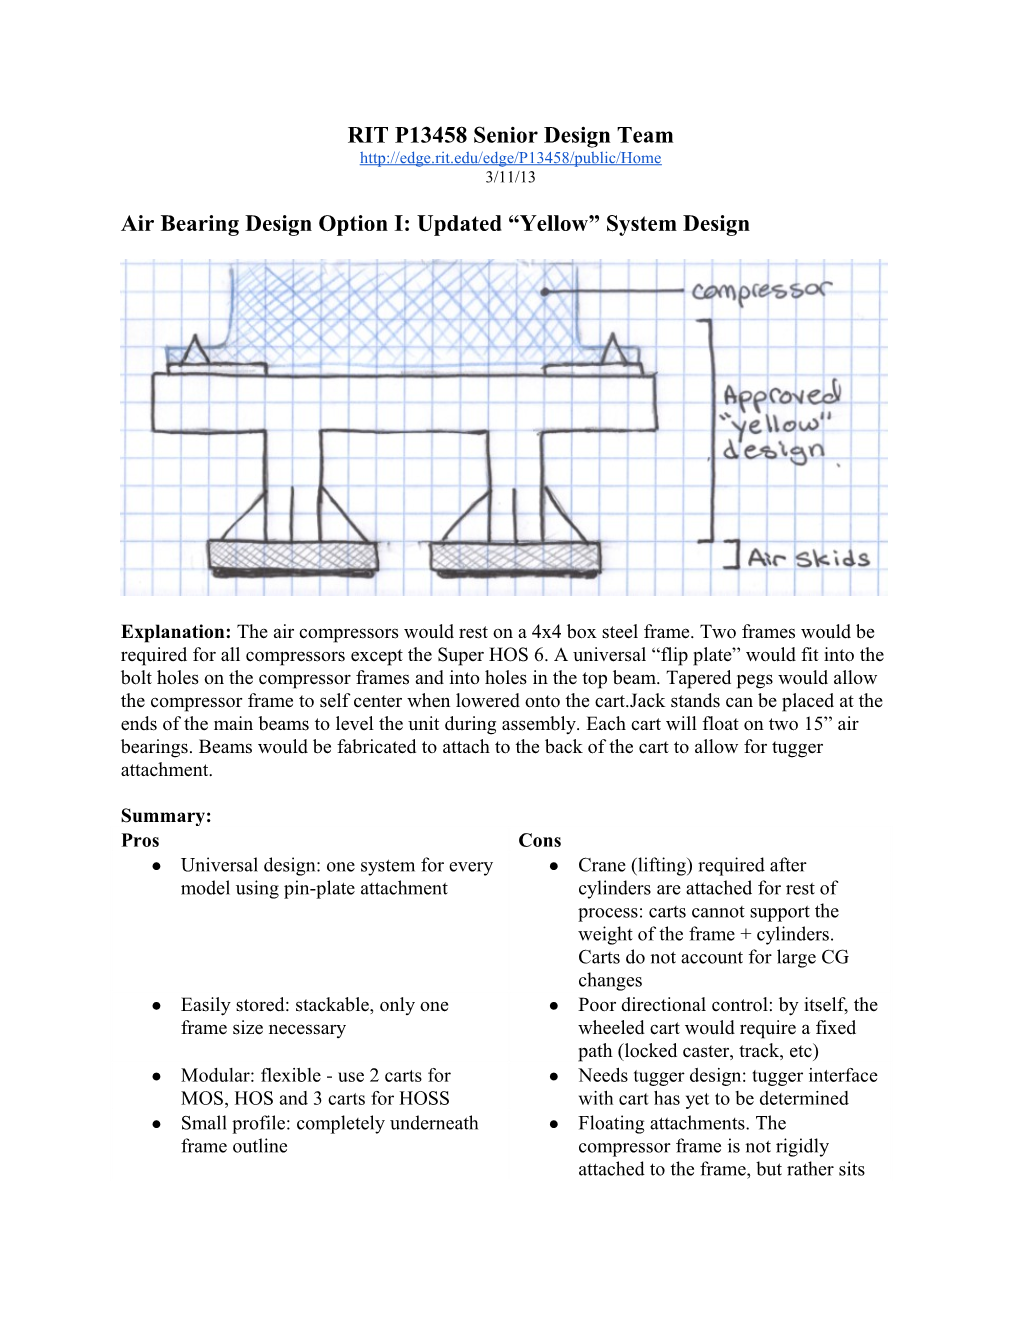 Air Bearing Design Options